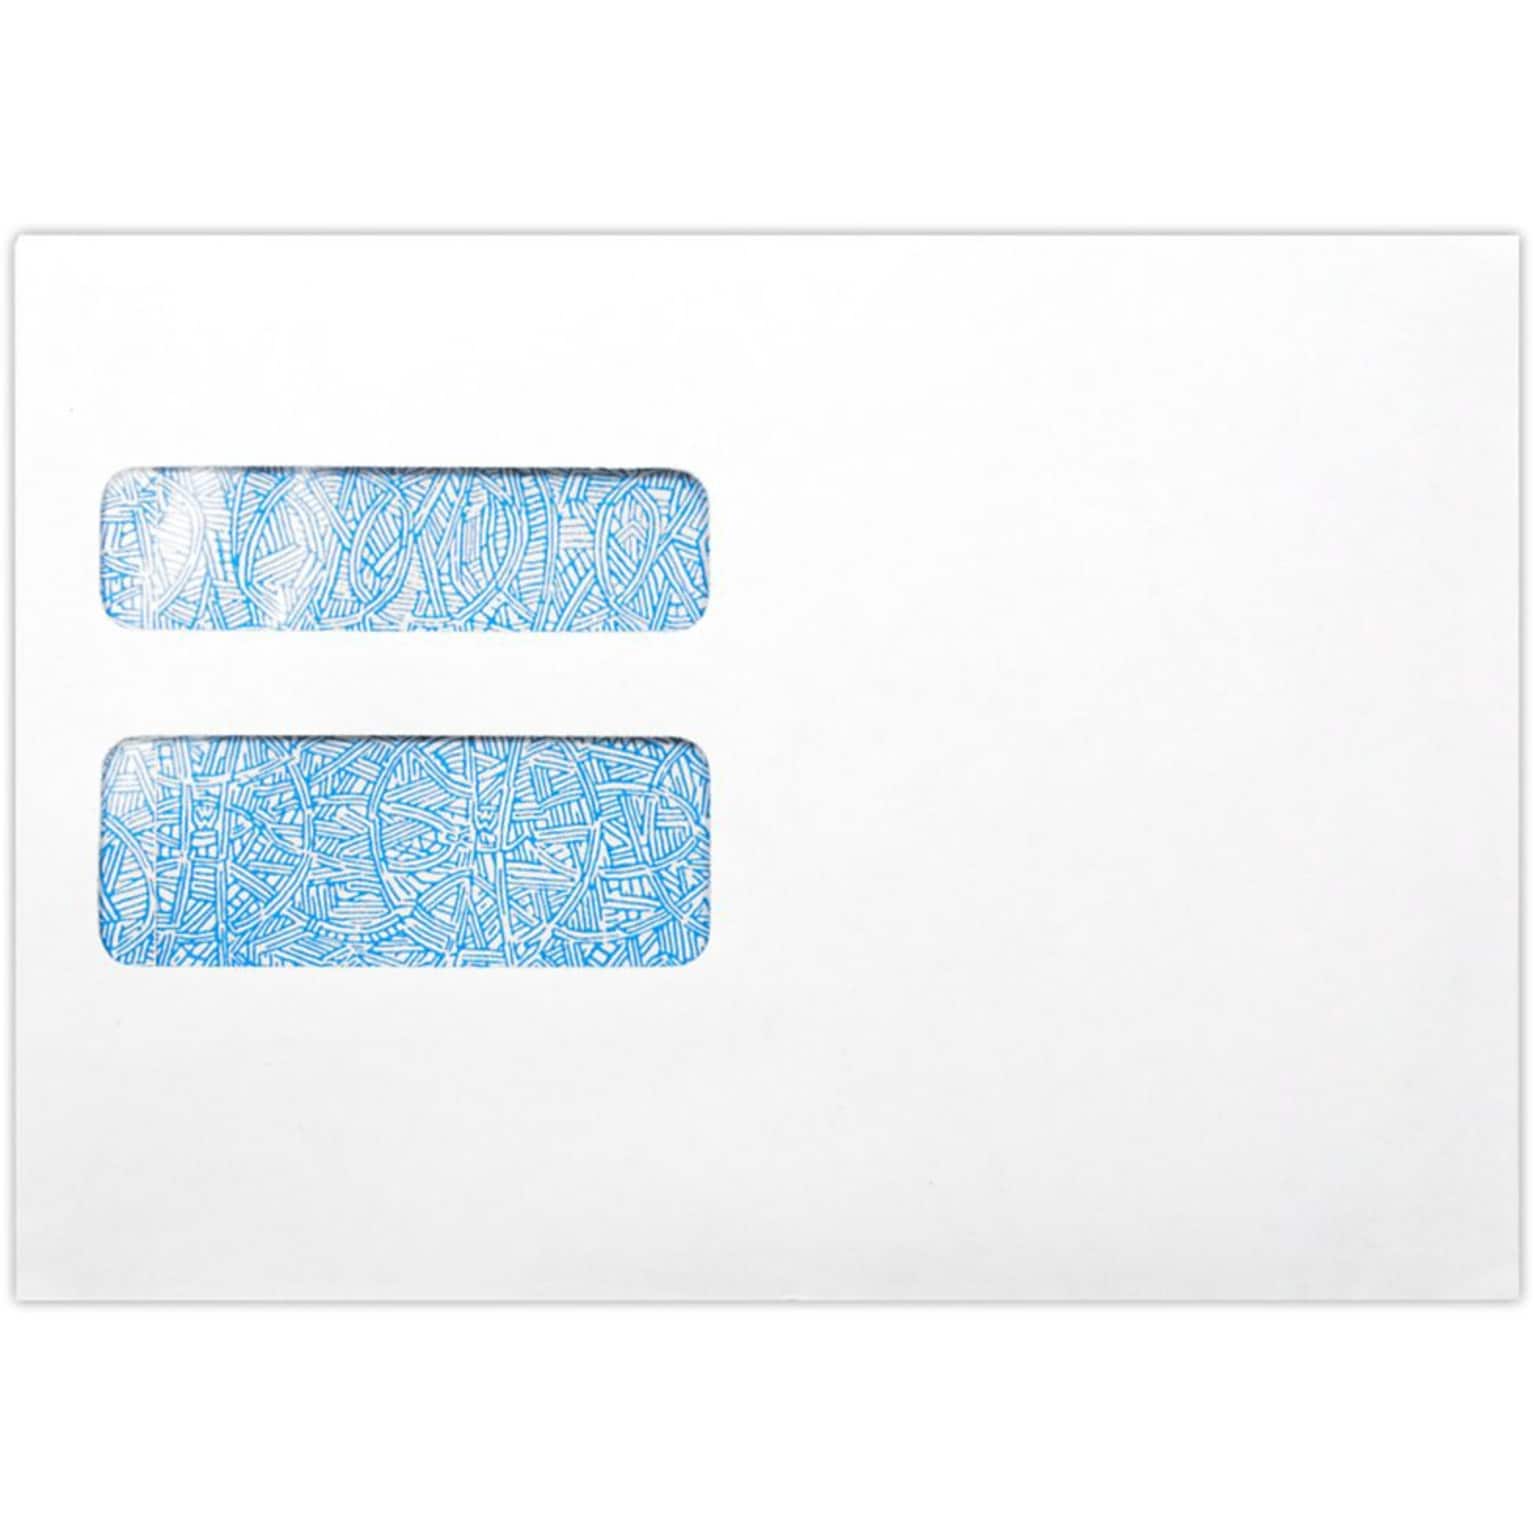 LUX W-2 / 1099 Envelopes (5 3/4 x 8) 250/Pack, White (7489-W2-250)